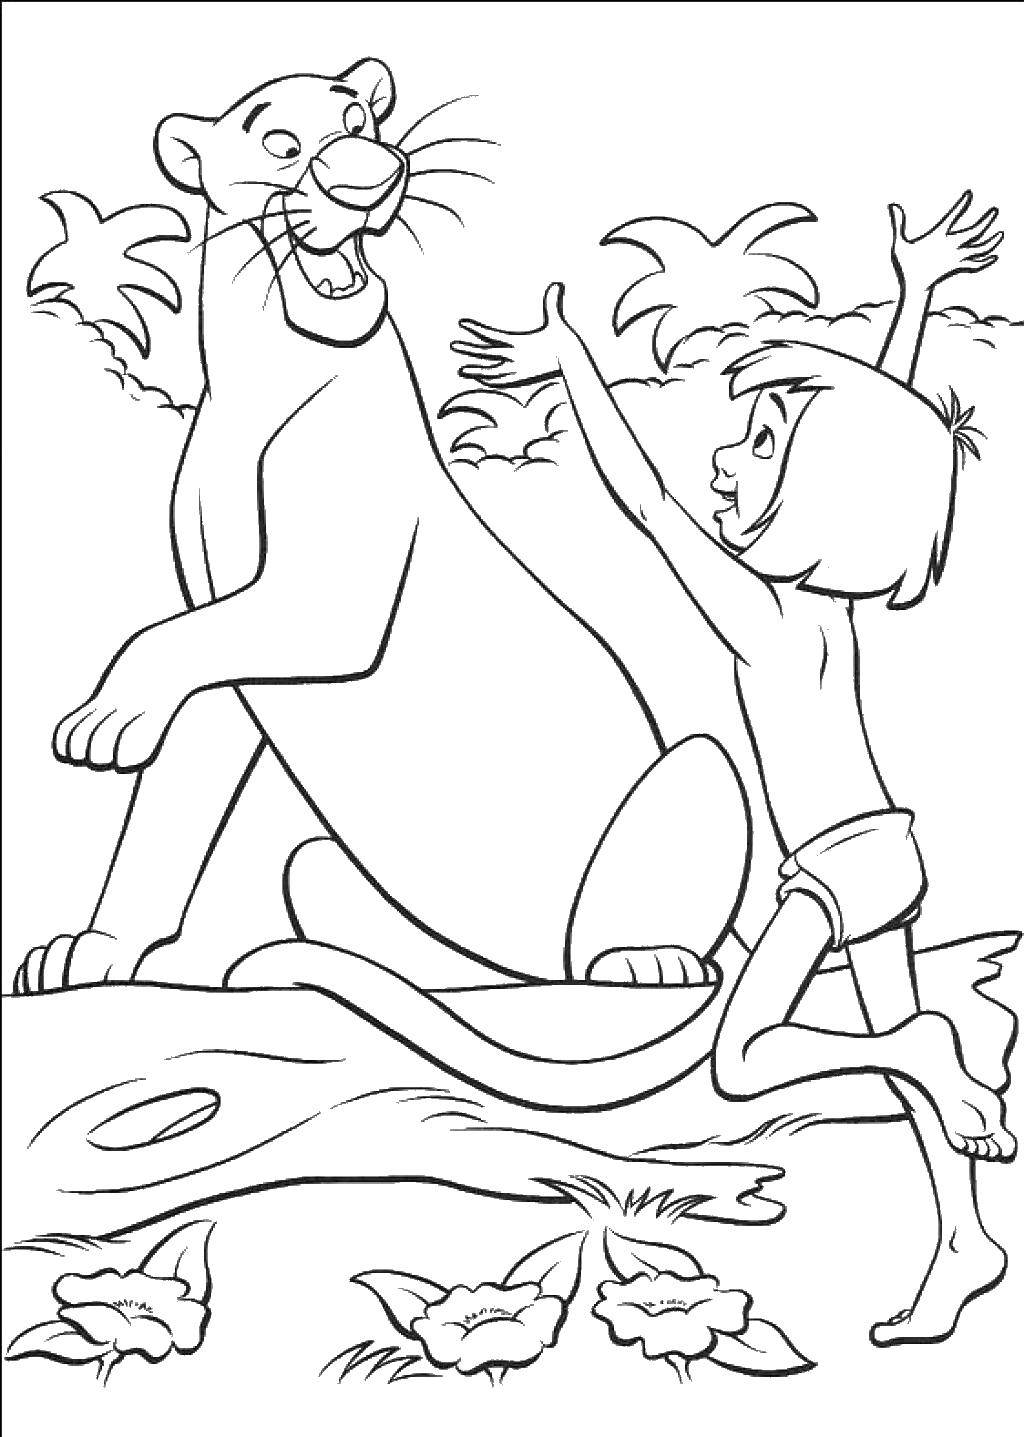 Coloring Mowgli and Bagheera. Category Mowgli. Tags:  Mowgli.